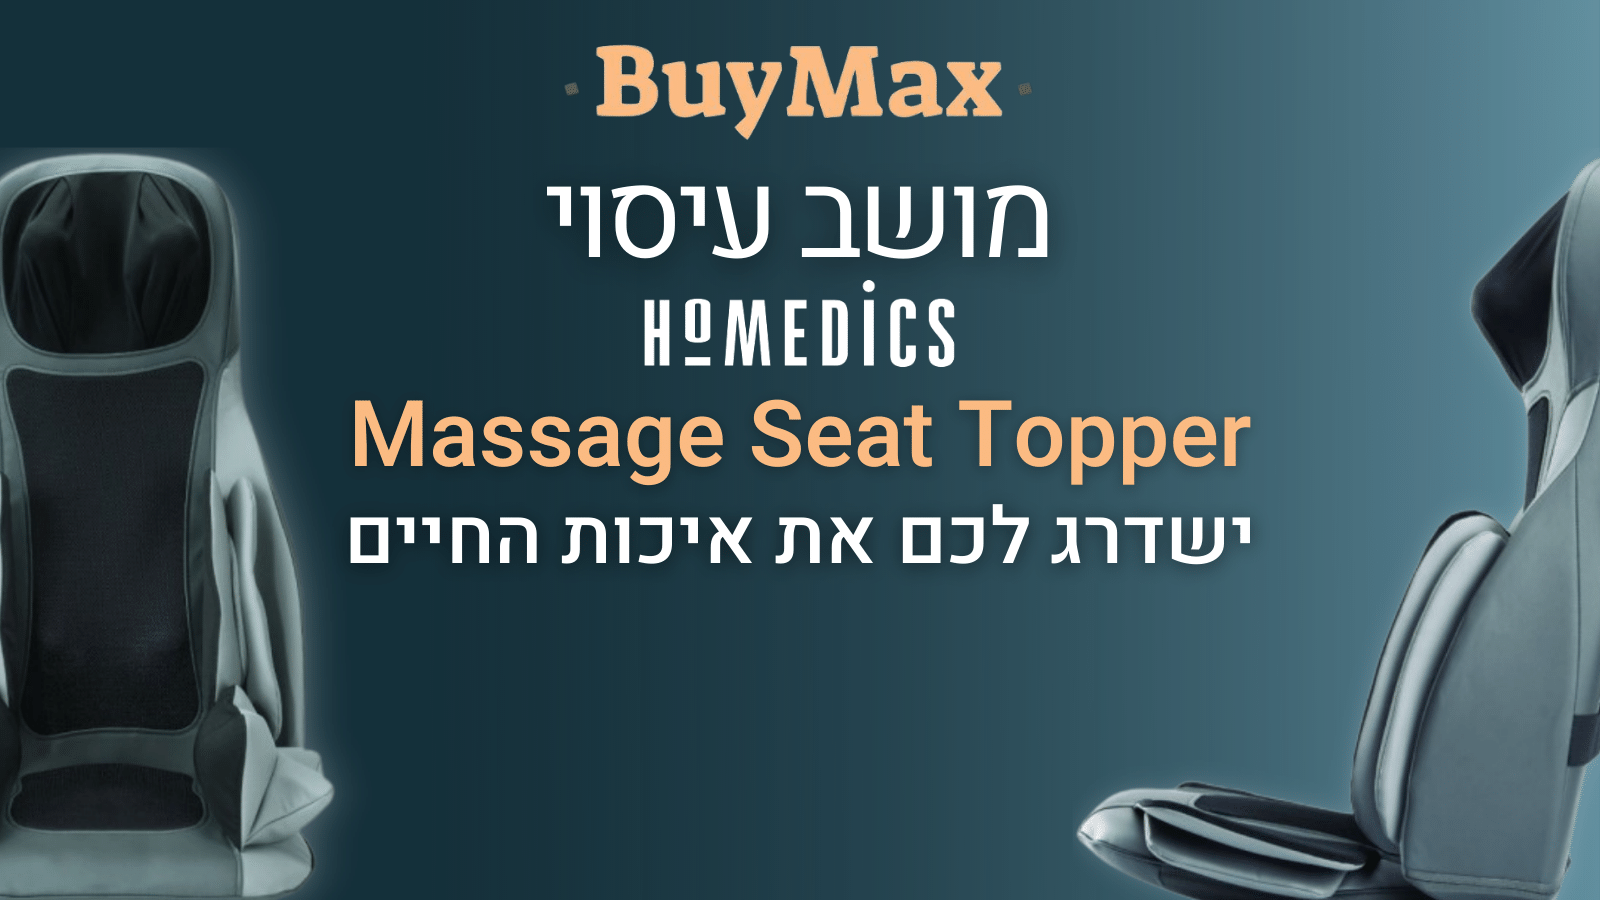 HoMedics Massage Seat Topper